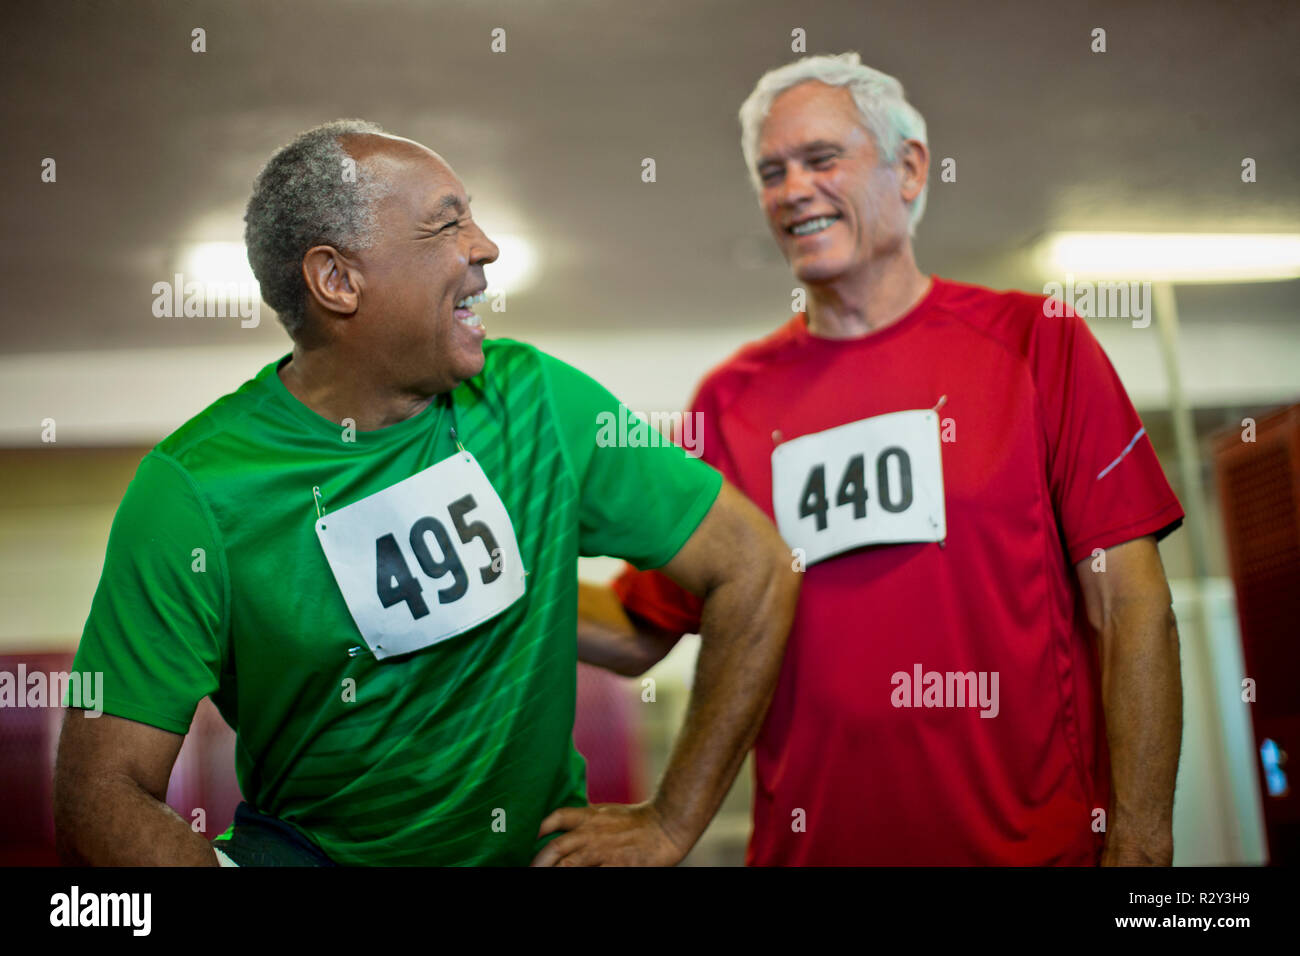 Senior men laughing and joking in a locker room. Stock Photo